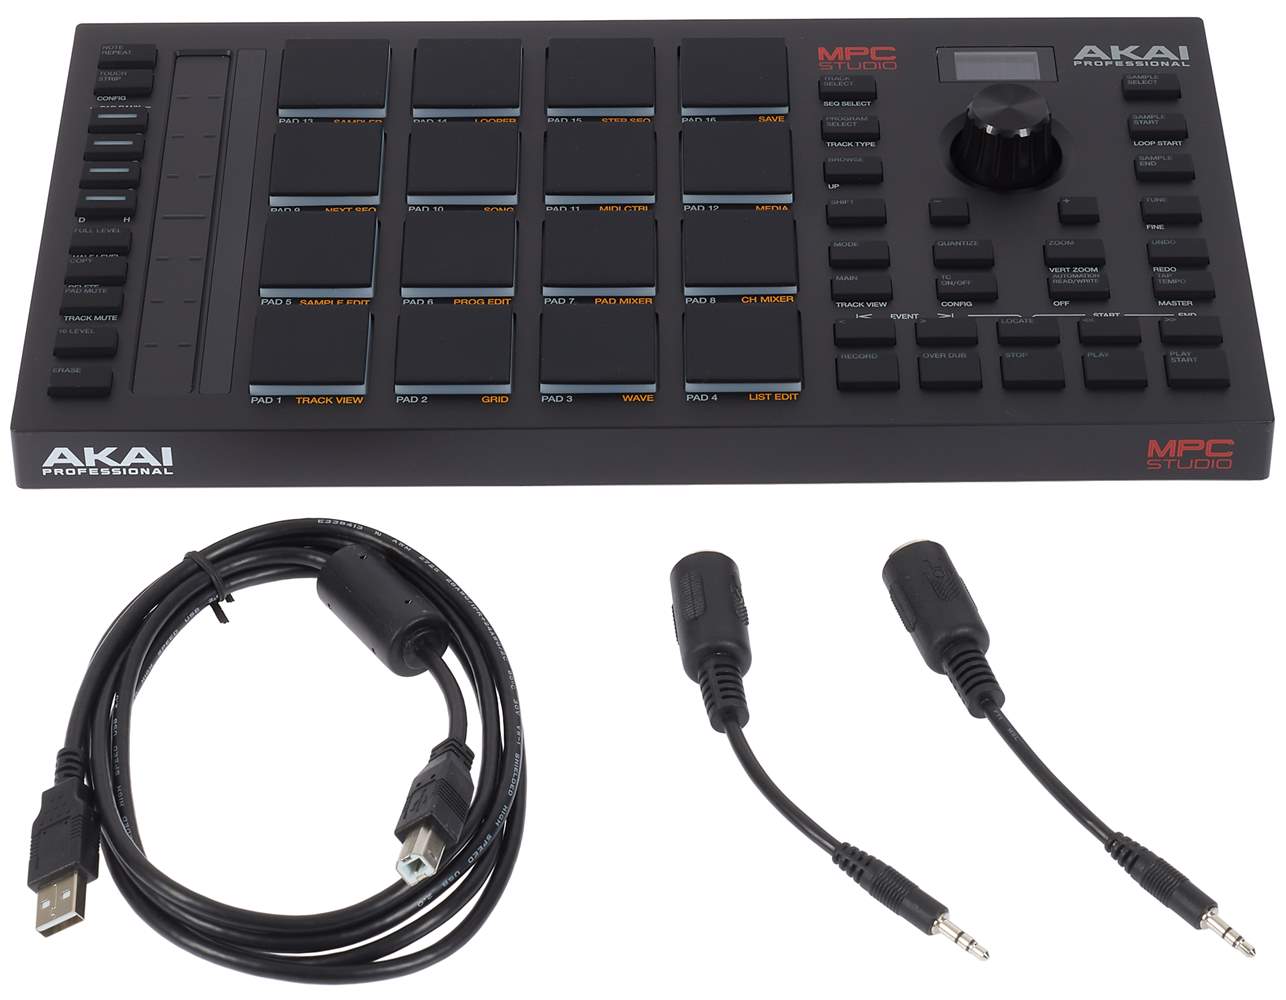 AKAI MPC Studio MK2 USB/MIDI Controller | Kytary.ie